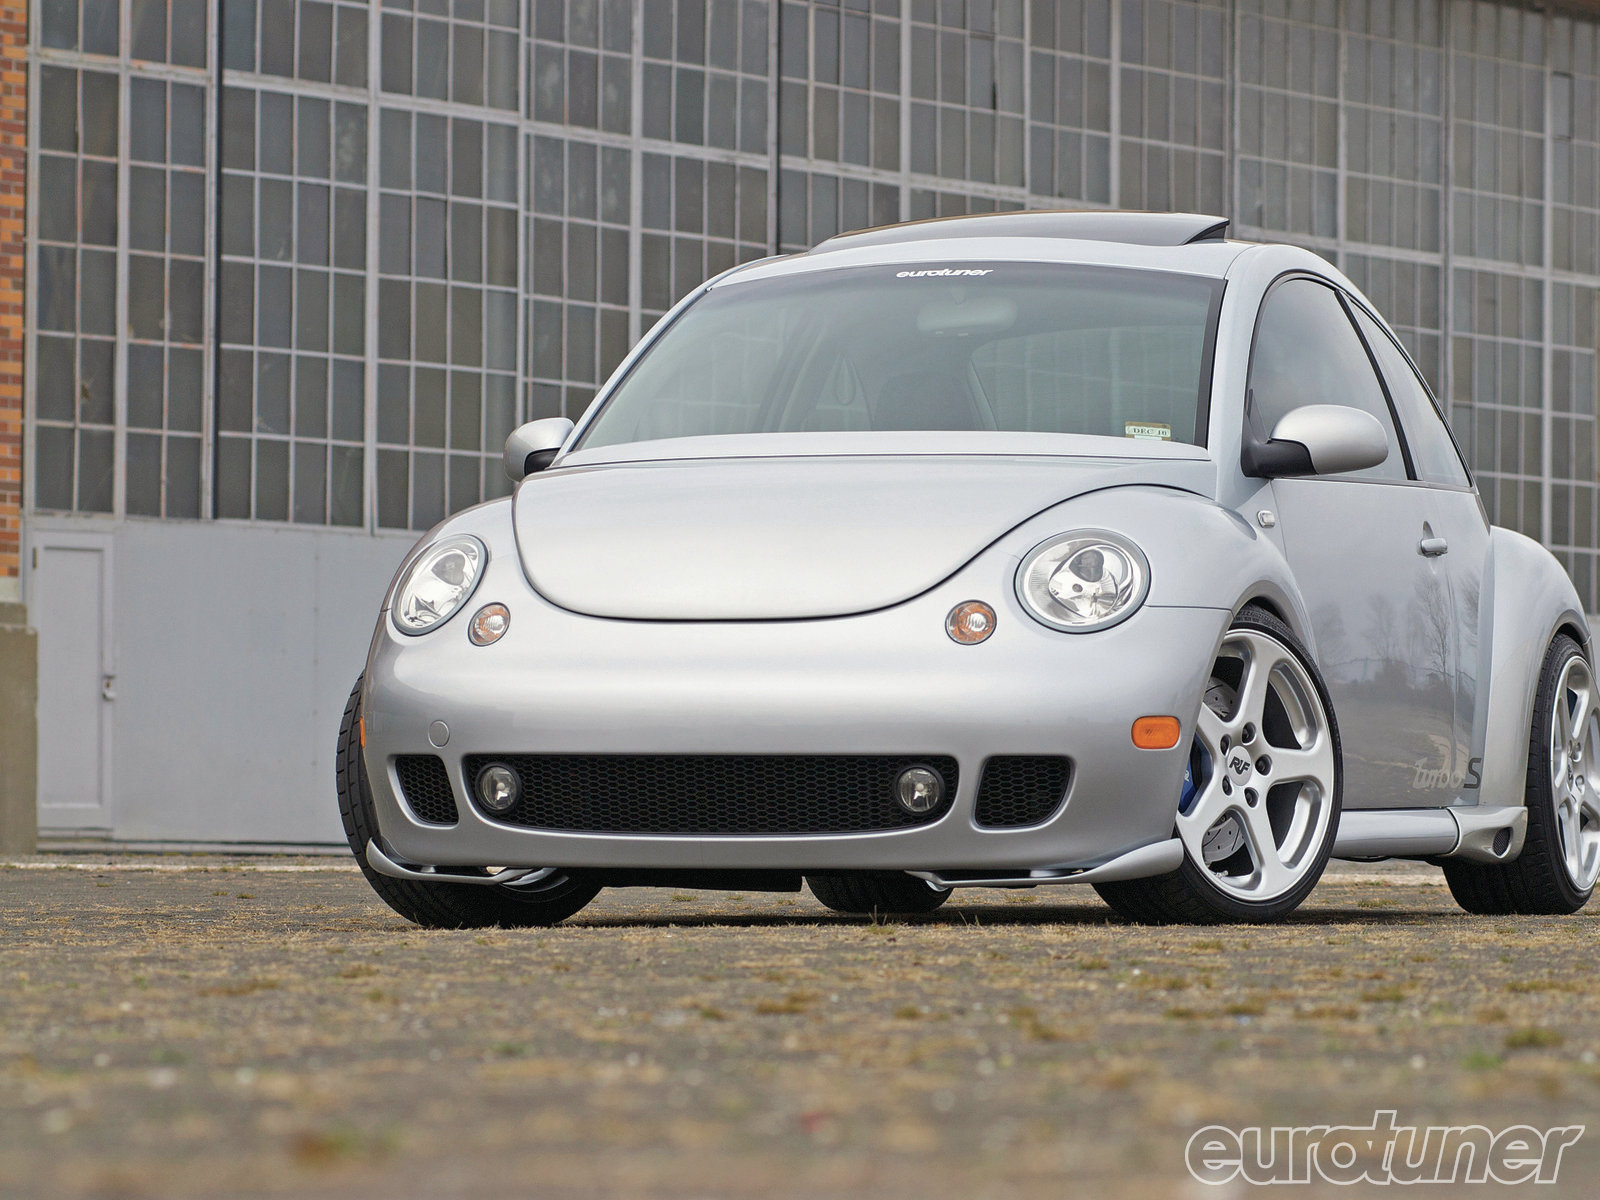 2002 VW Beetle Turbo S - Raise The Ruf